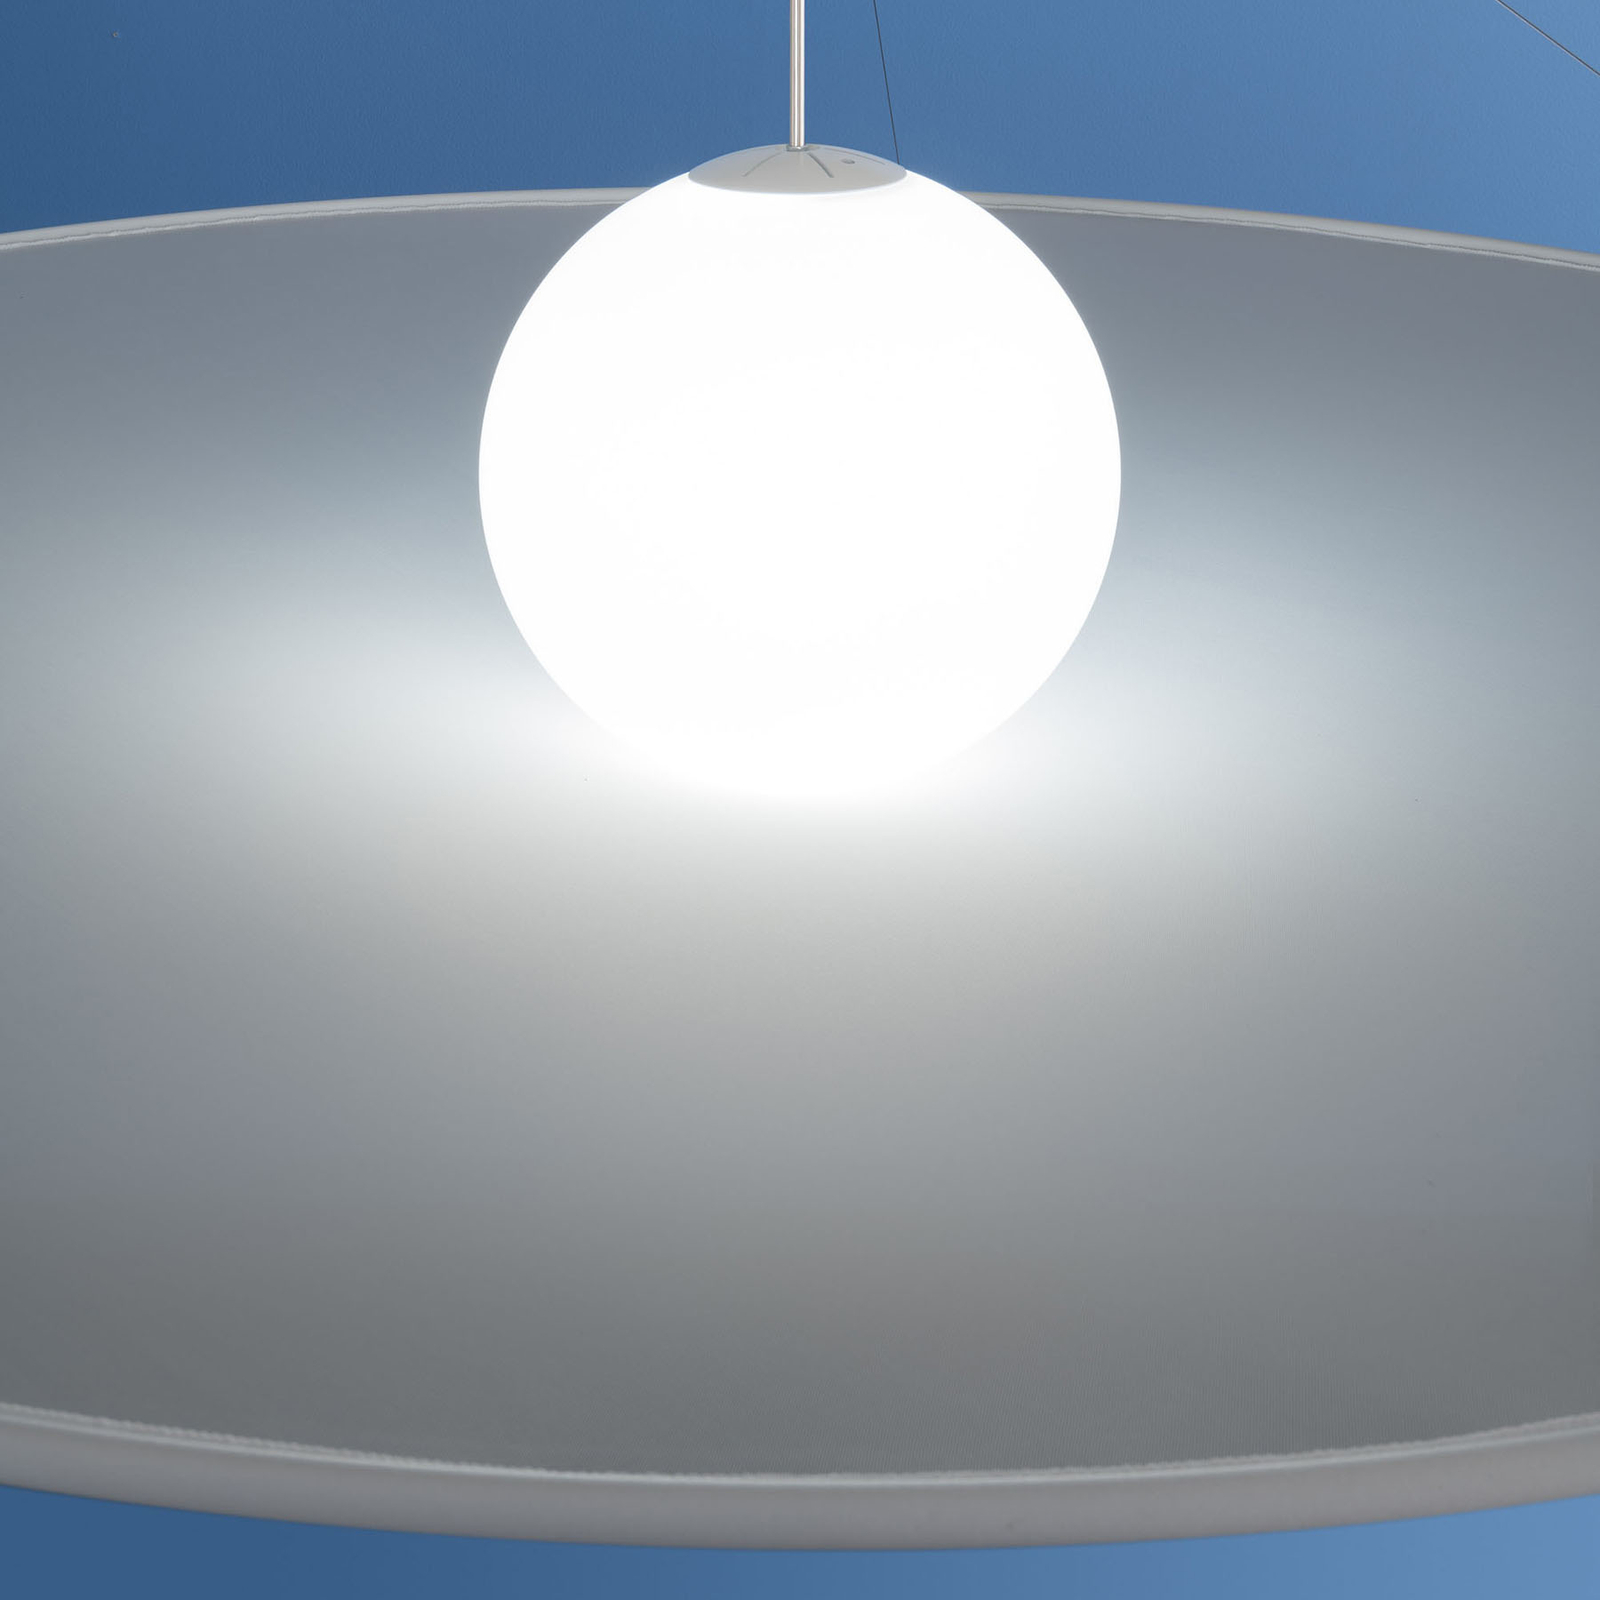 Axolight Manto LED designer pendant light Ø 70 cm